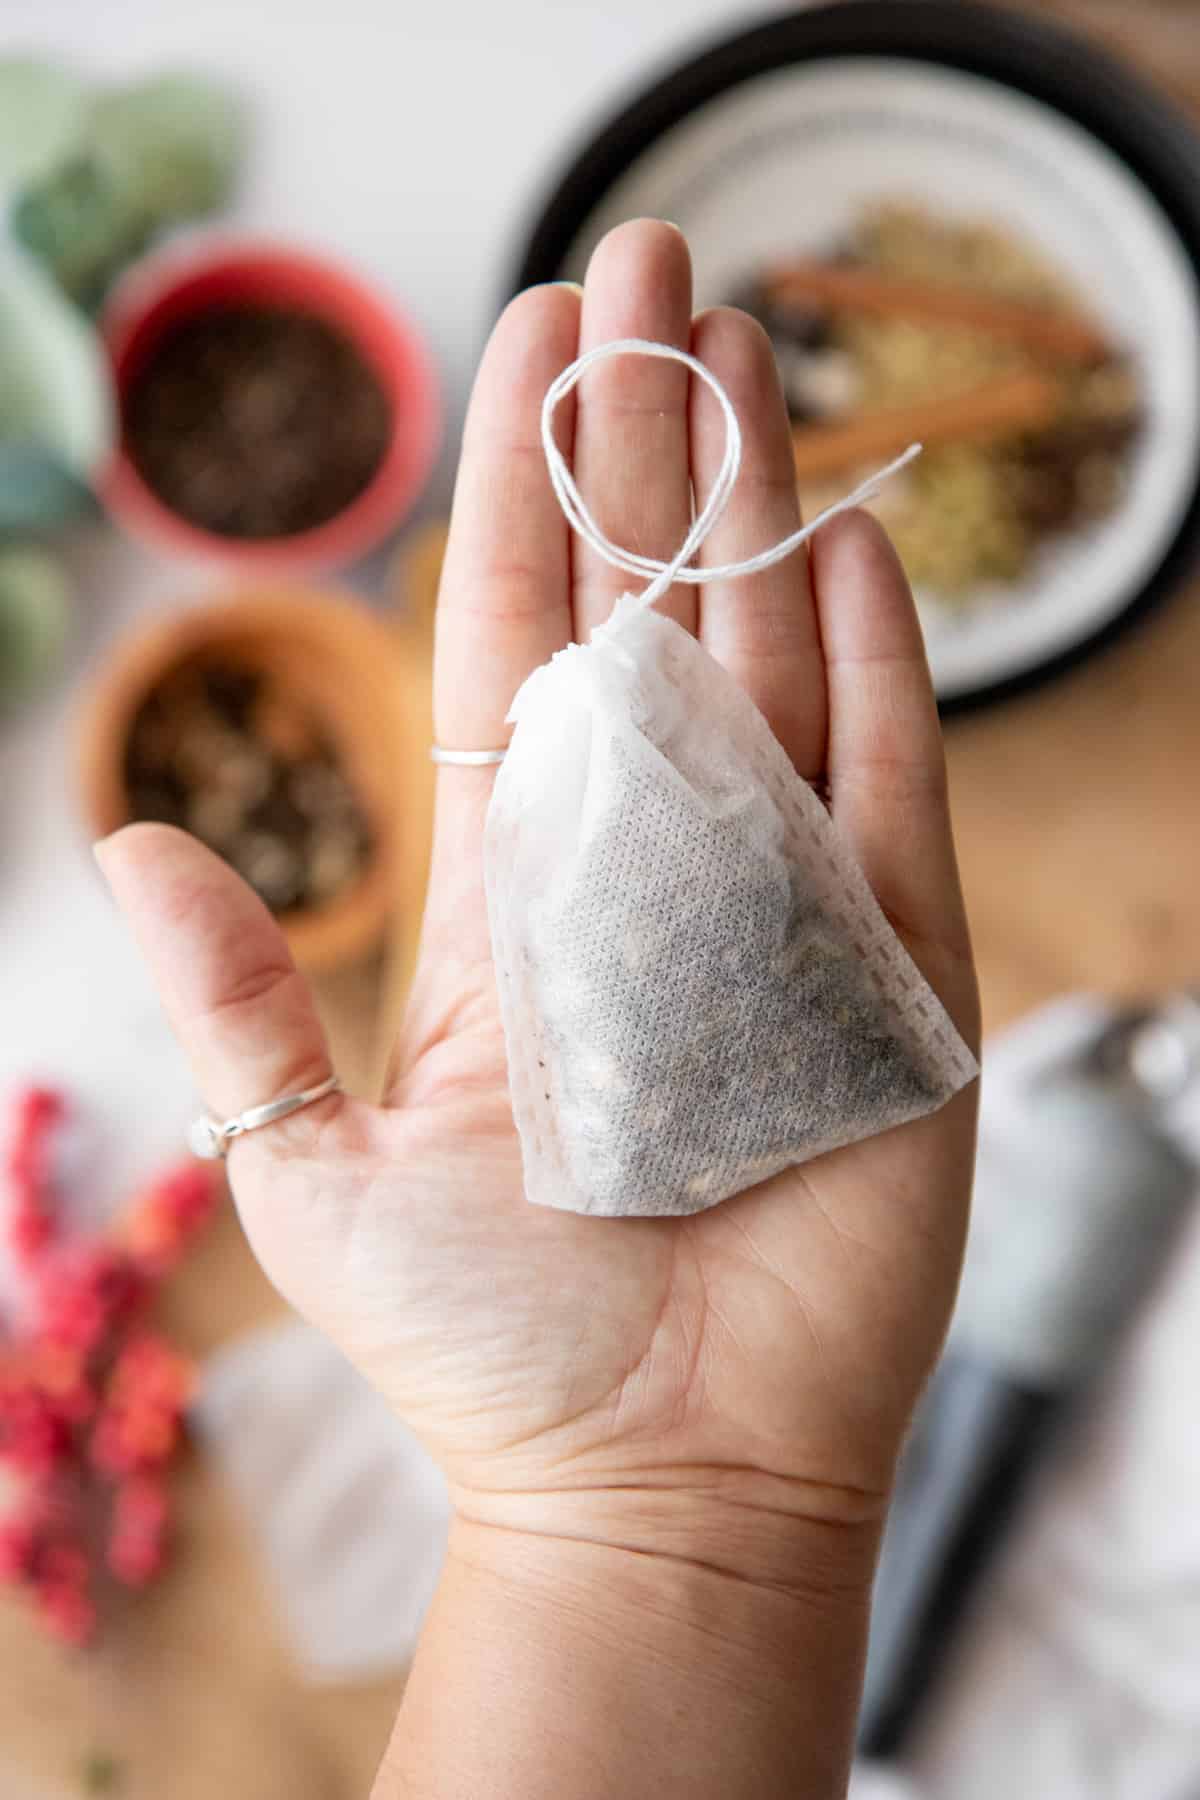 A hand holds a tea bag filled with homemade chai tea blend.